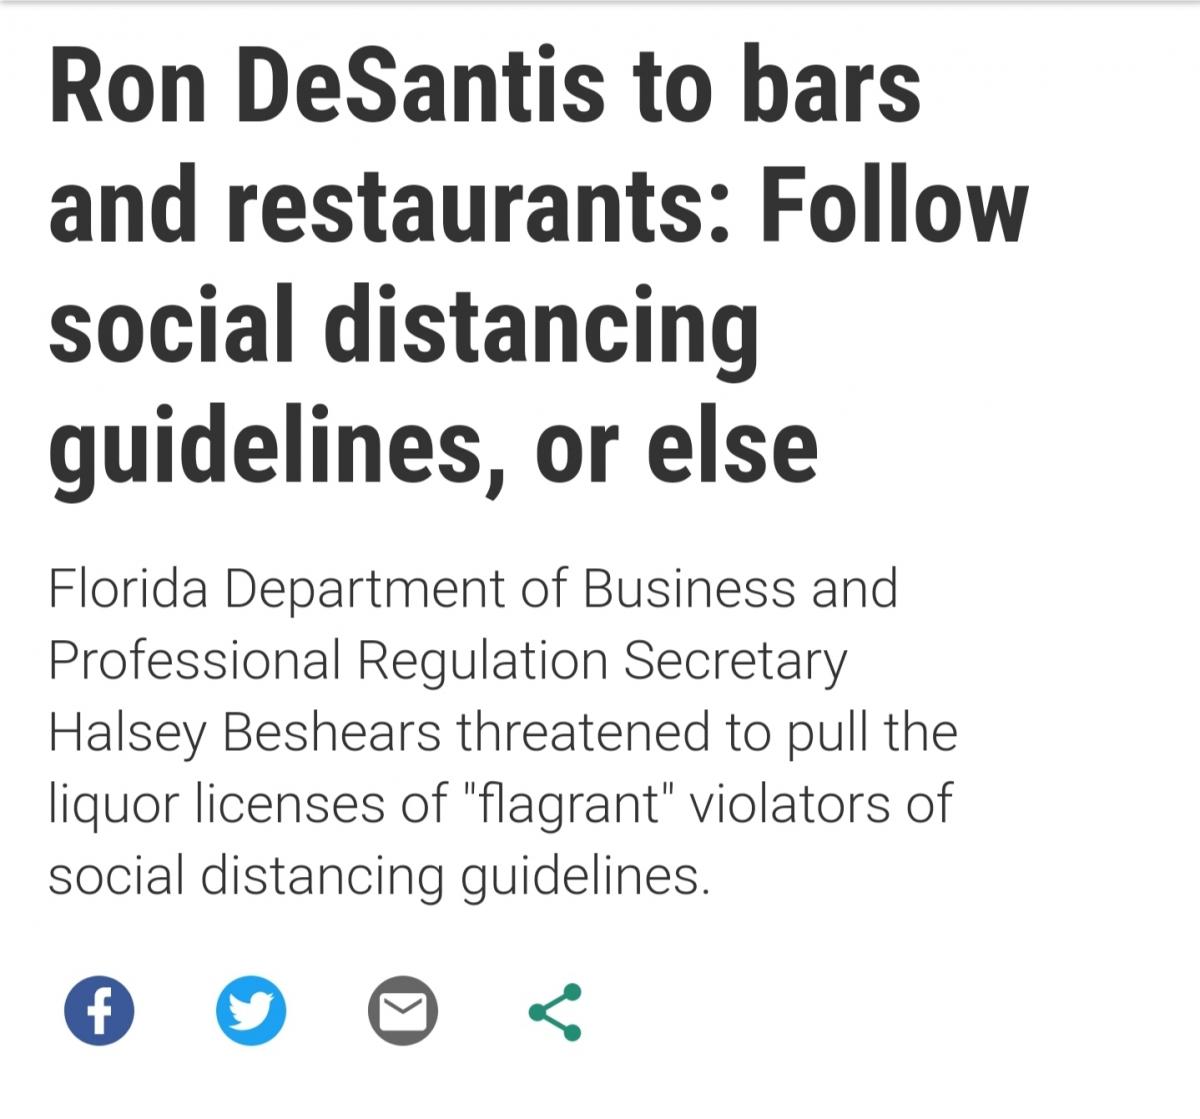 Restaurants & Bars That Do Not Follow Social Distancing Guidelines Now Risk Losing Their Liquor Licenses, Says Gov. DeSantis